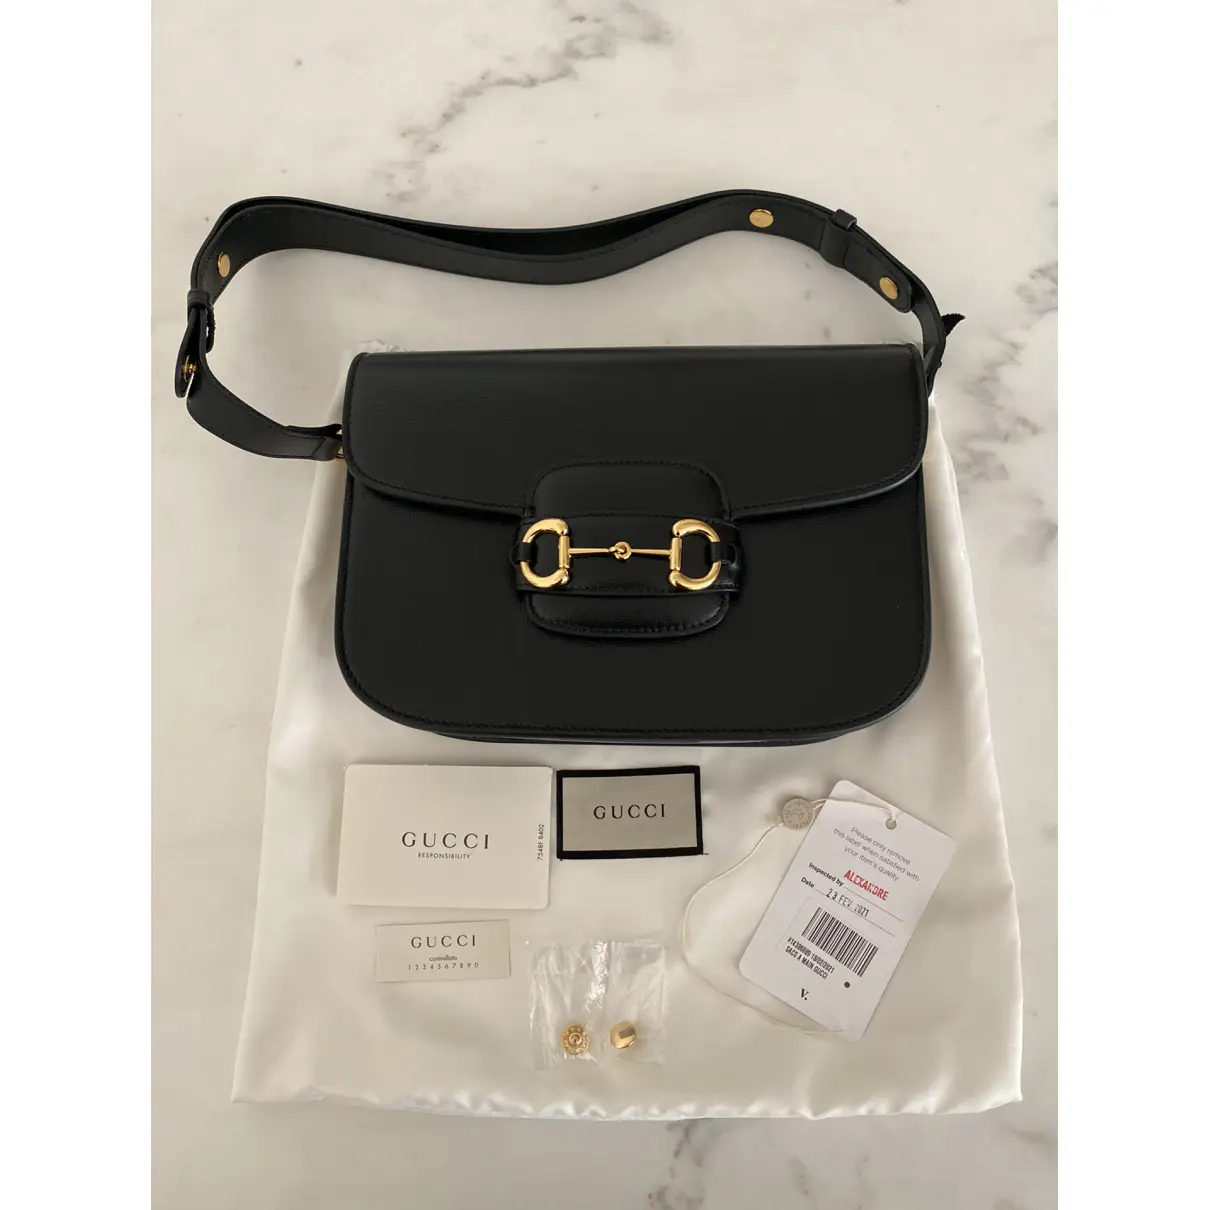 Buy Gucci Horsebit 1955 leather handbag online